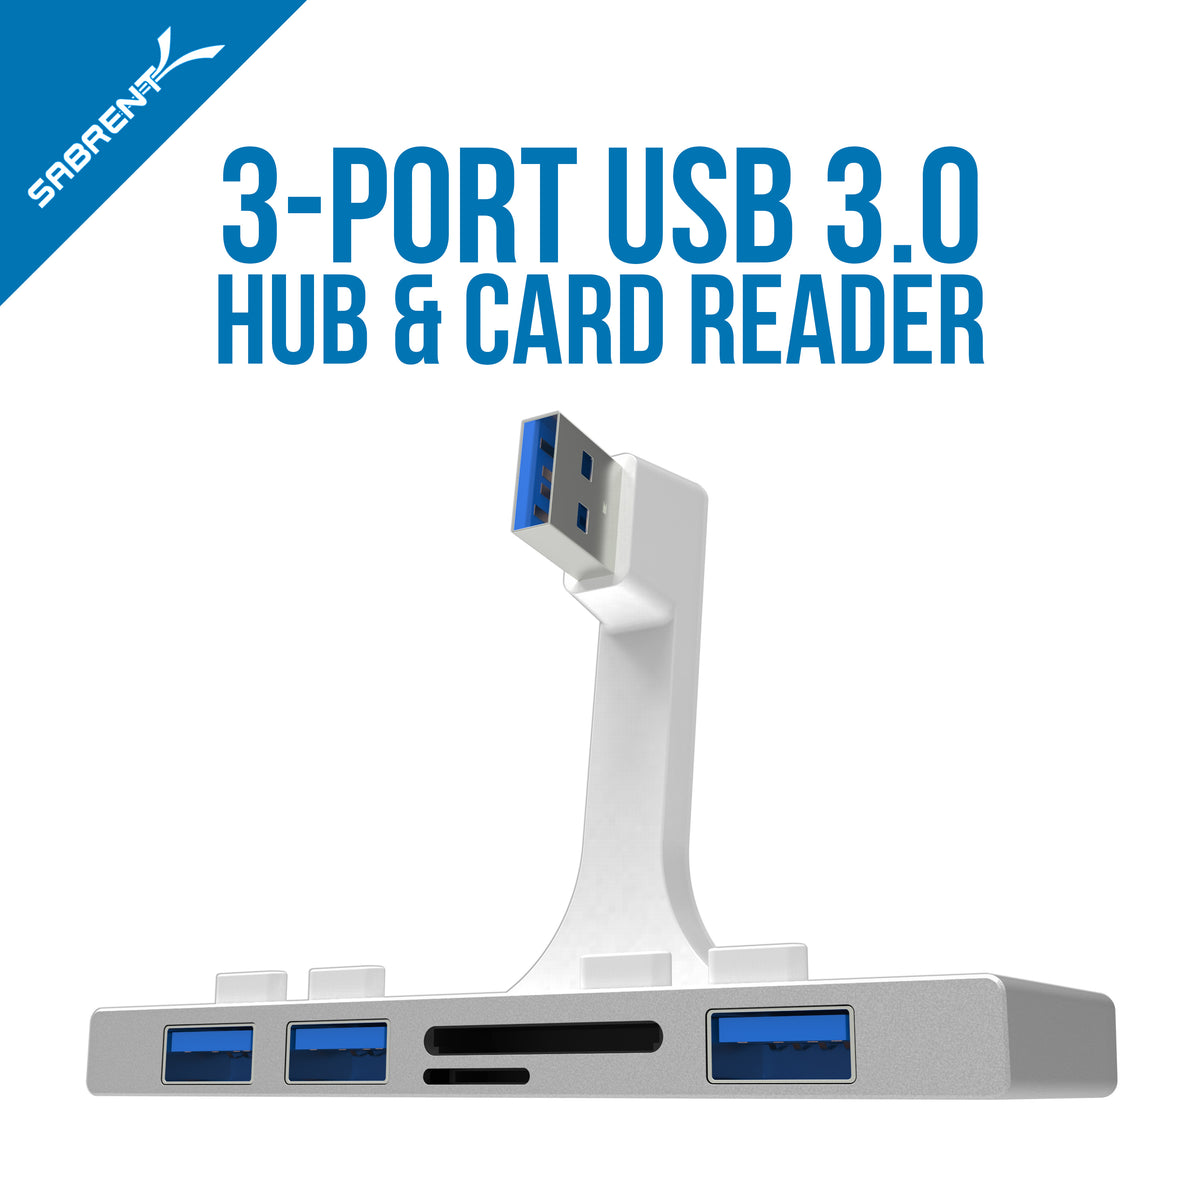 3-Port USB 3.0 Hub with Card Reader